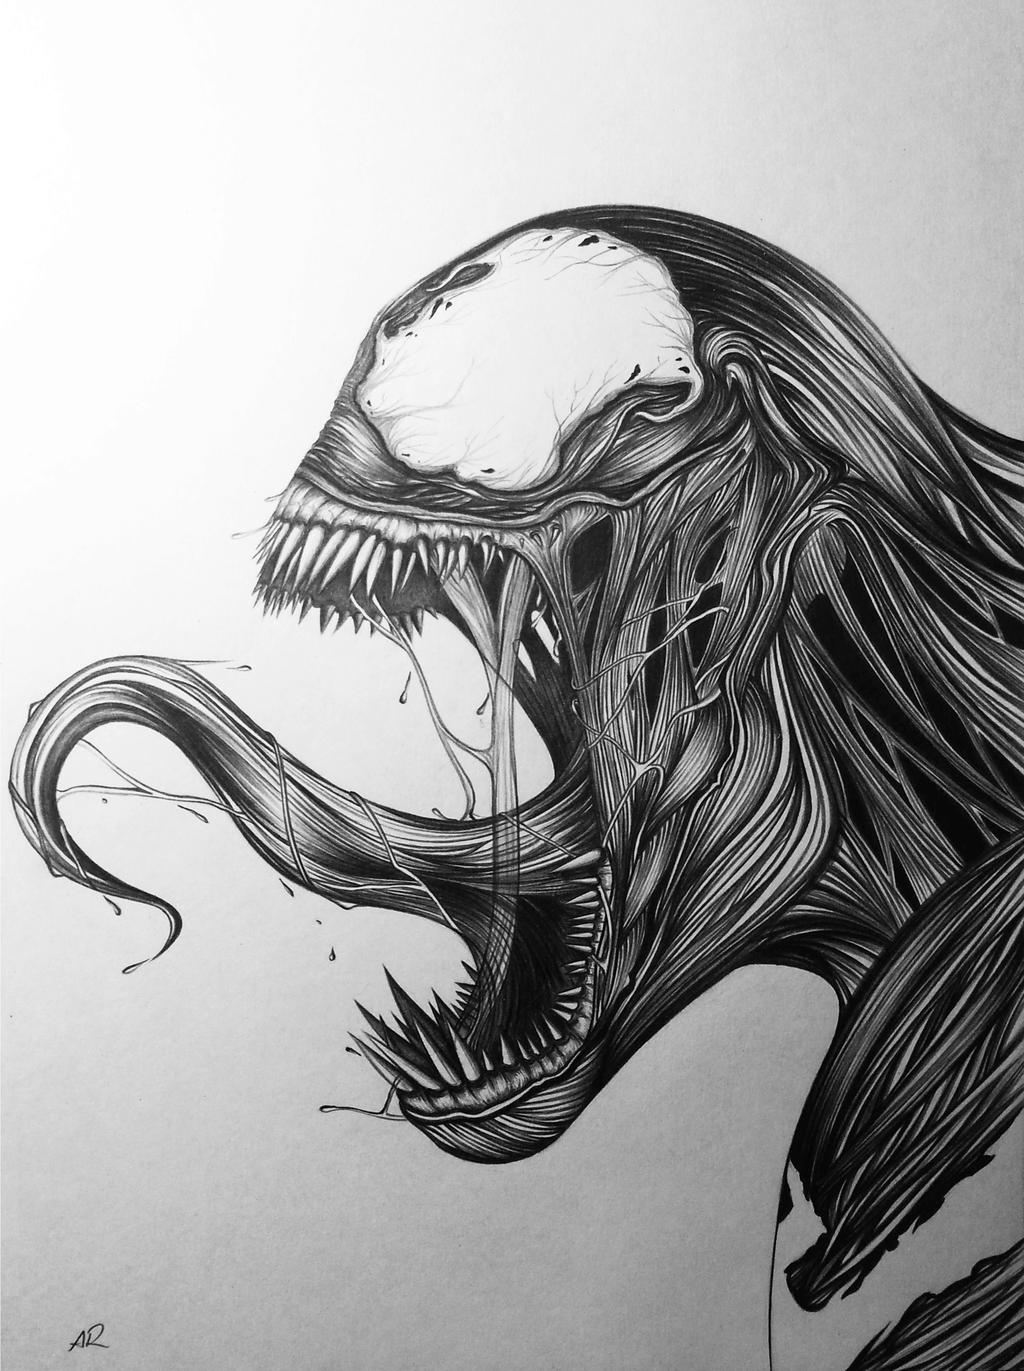 Venom by ribado09 on DeviantArt